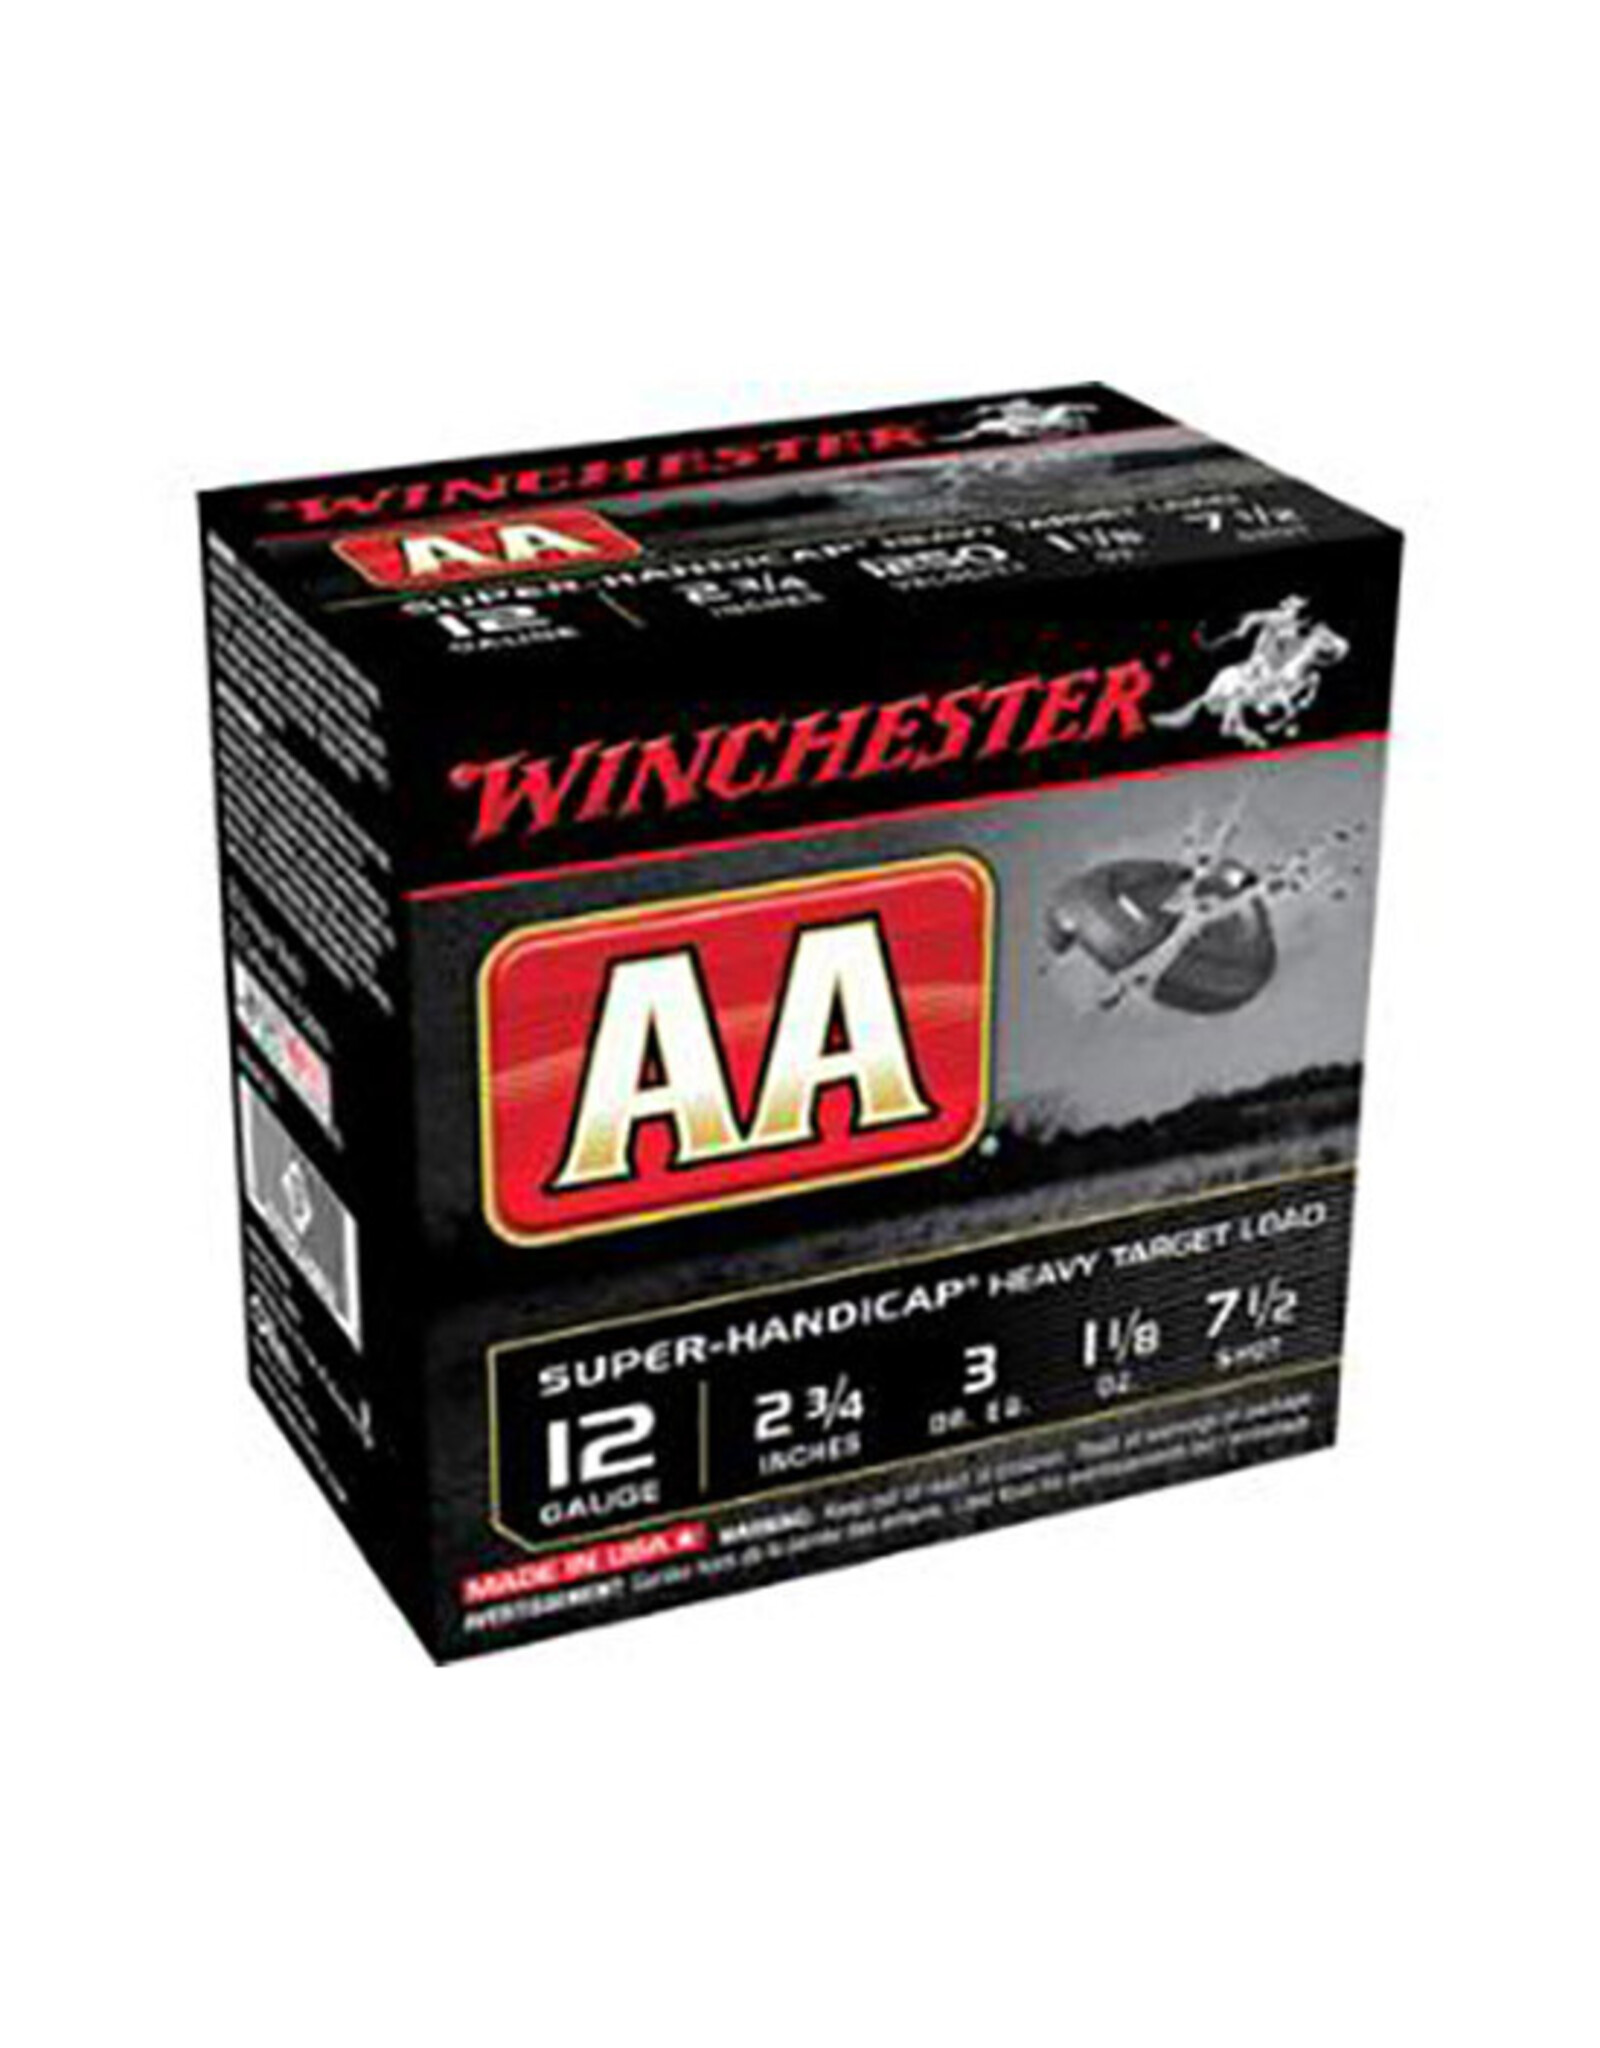 WINCHESTER AMMO Winchester AA Super Handicap 12 Gauge 2.75" 1-1/8 Oz #8 1250 FPS - 250 Count